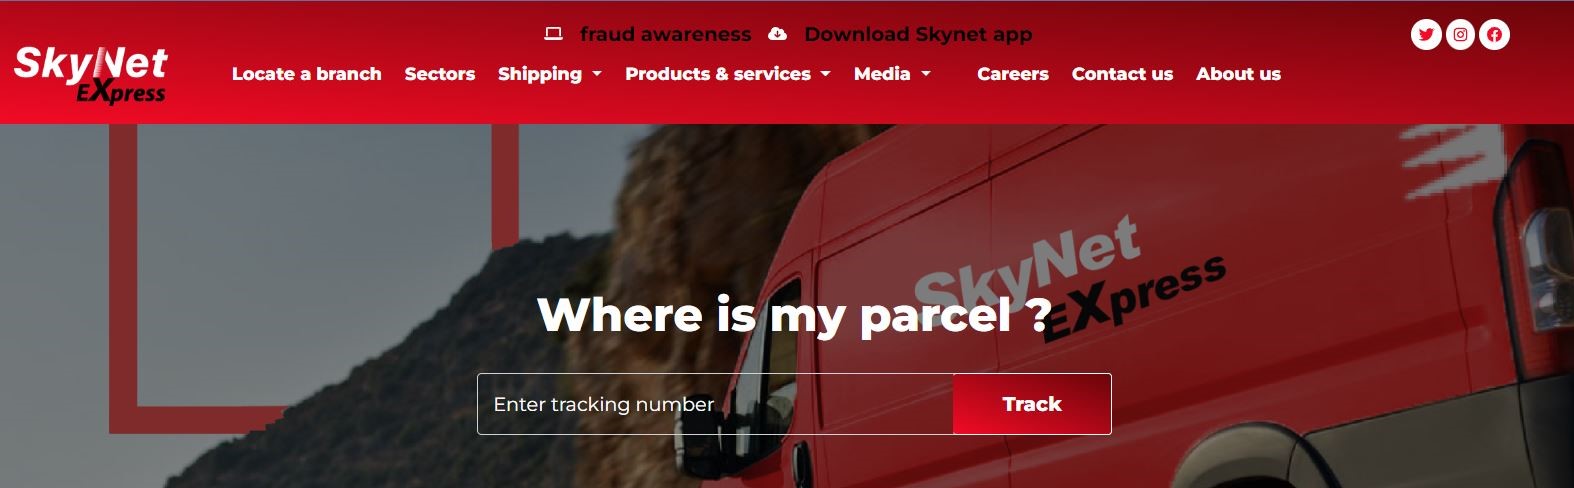 trackng shipment